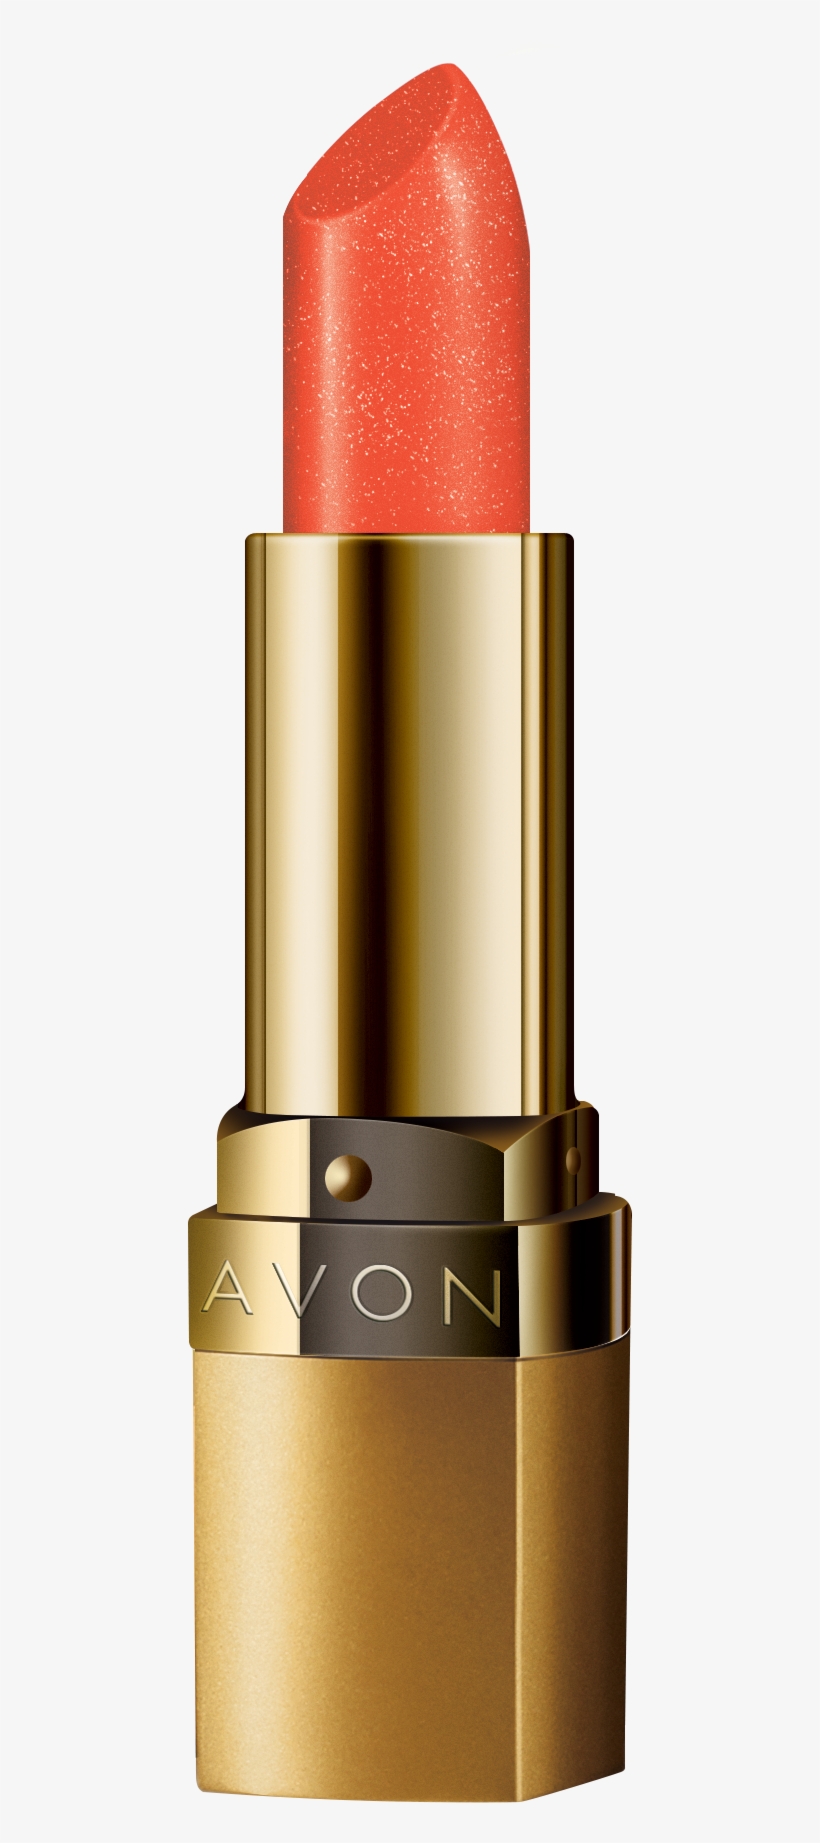 Avon Gold Shine Ls - Avon Gold Shine Lipstick, transparent png #1258760